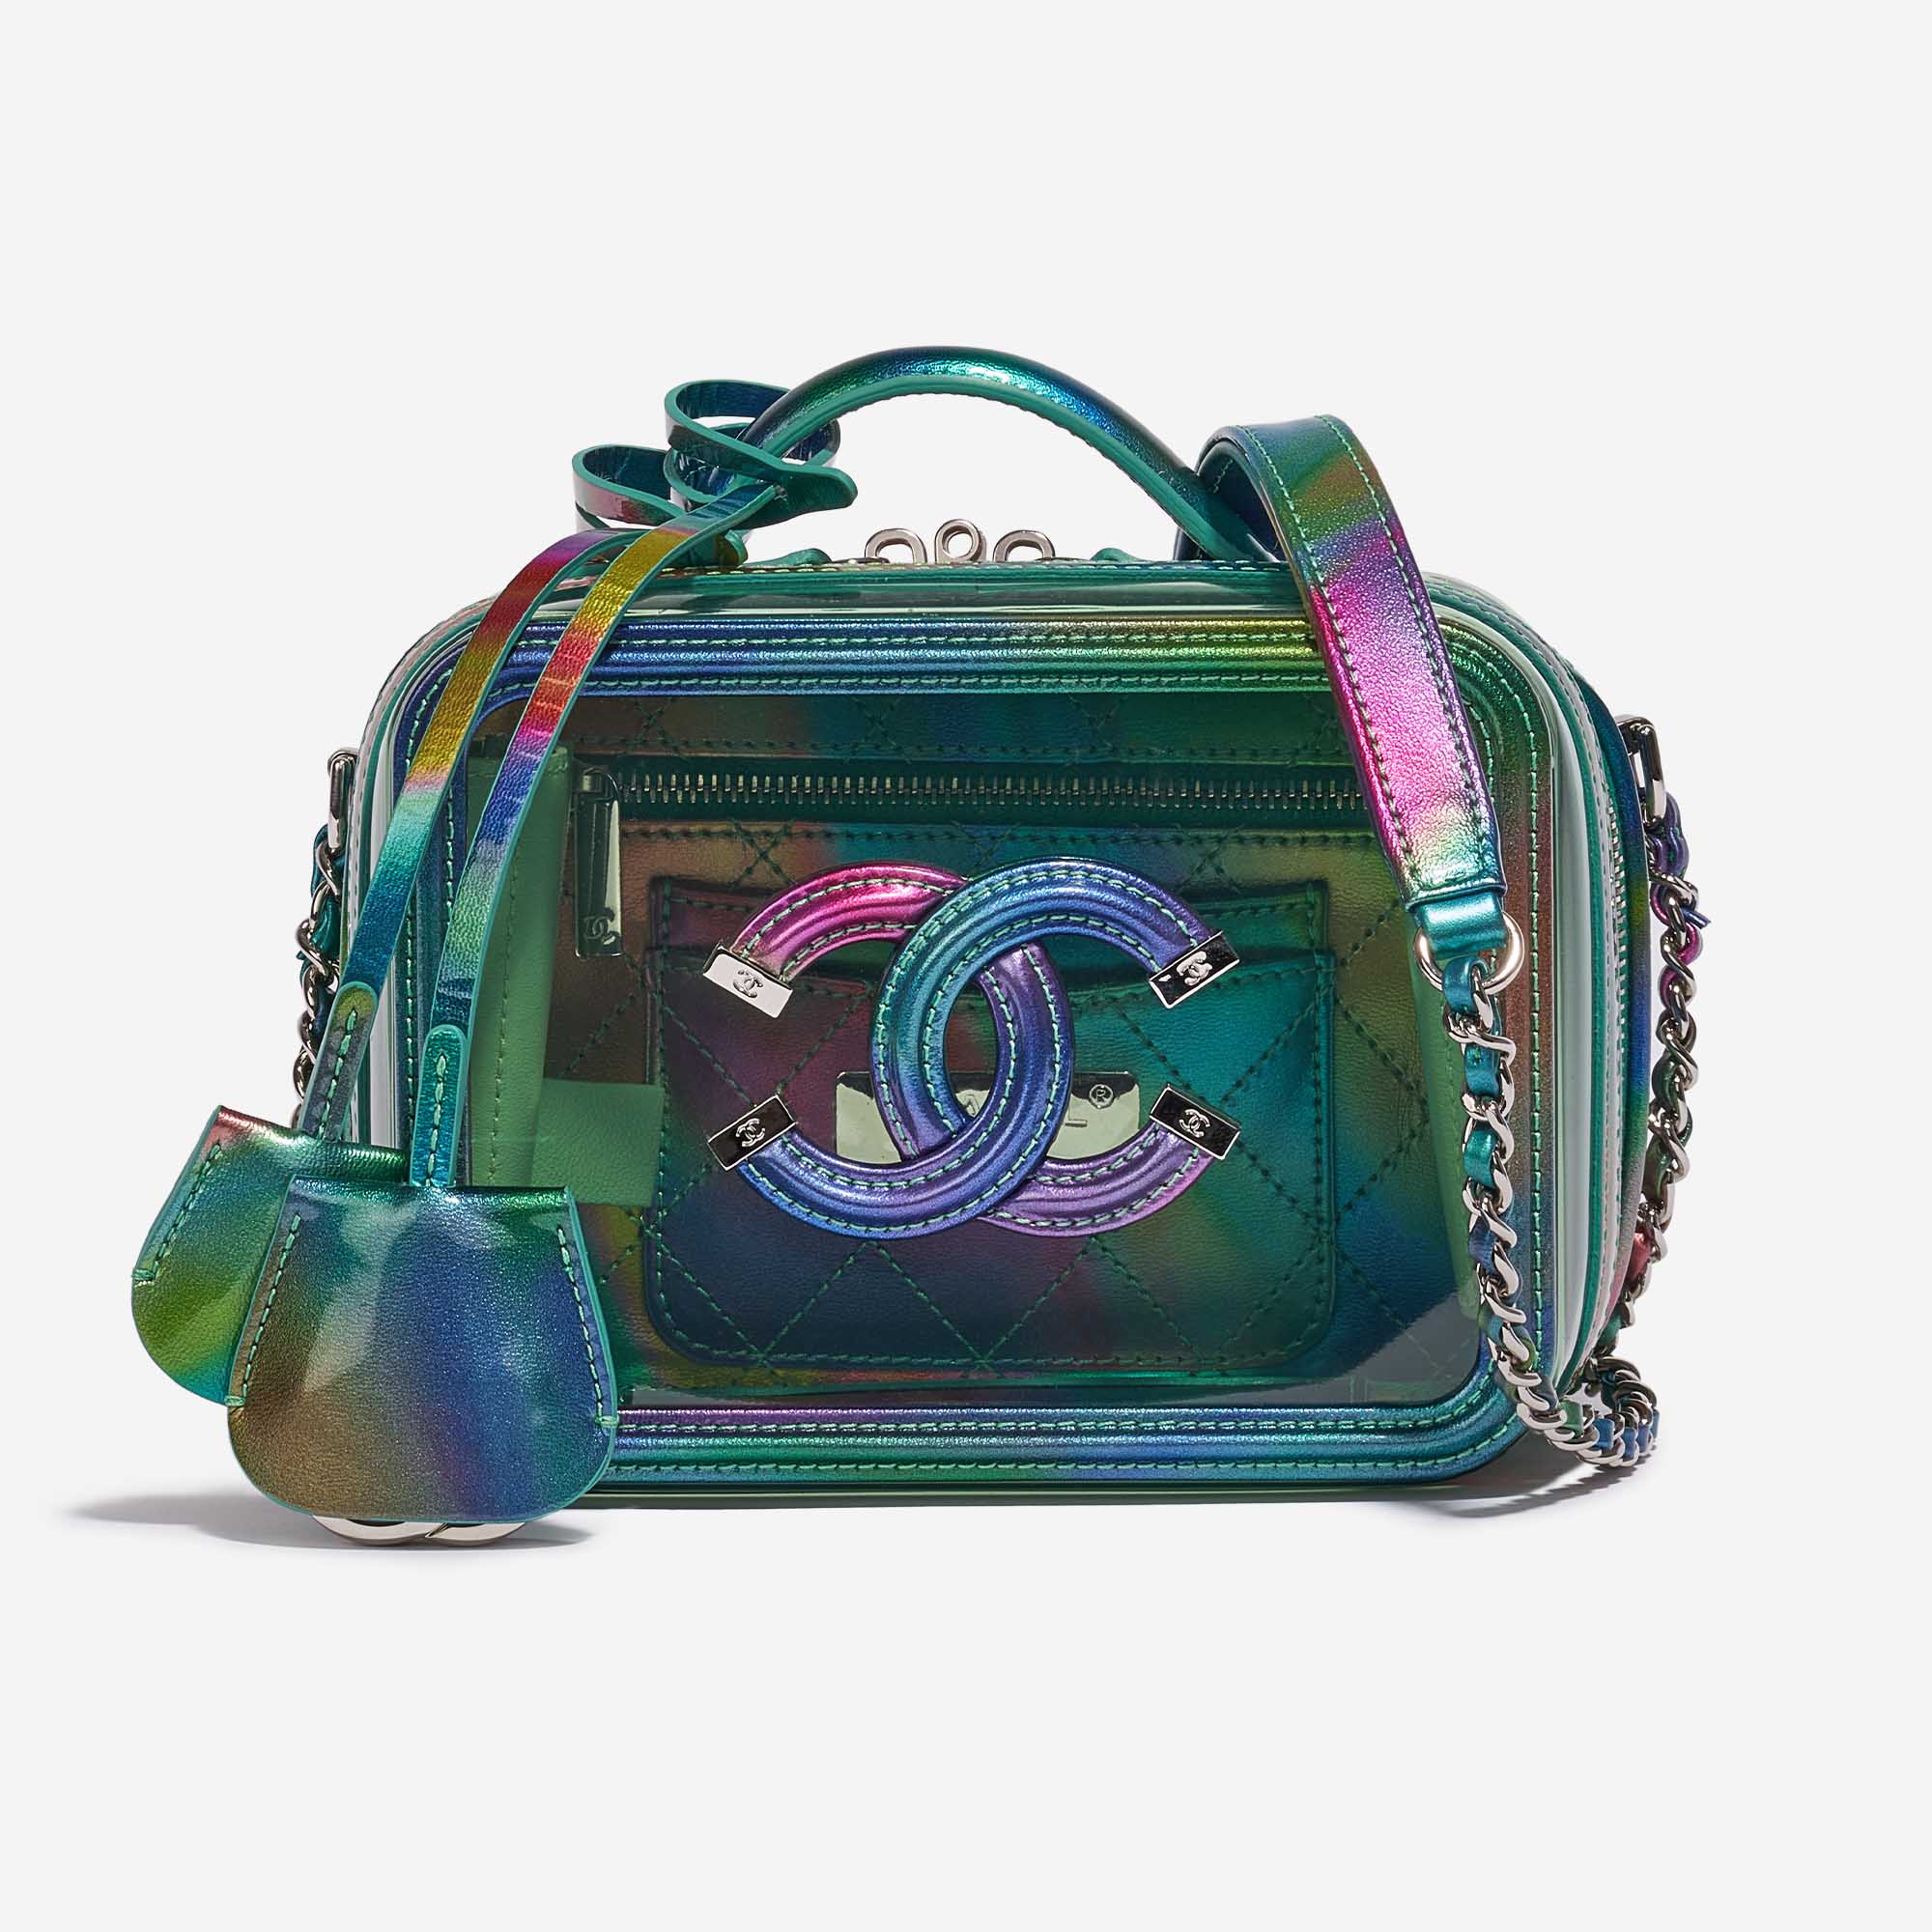 Chanel Sac Vanity Petit Arc-en-ciel Cuir Verni Vert Iridescent / Transparent